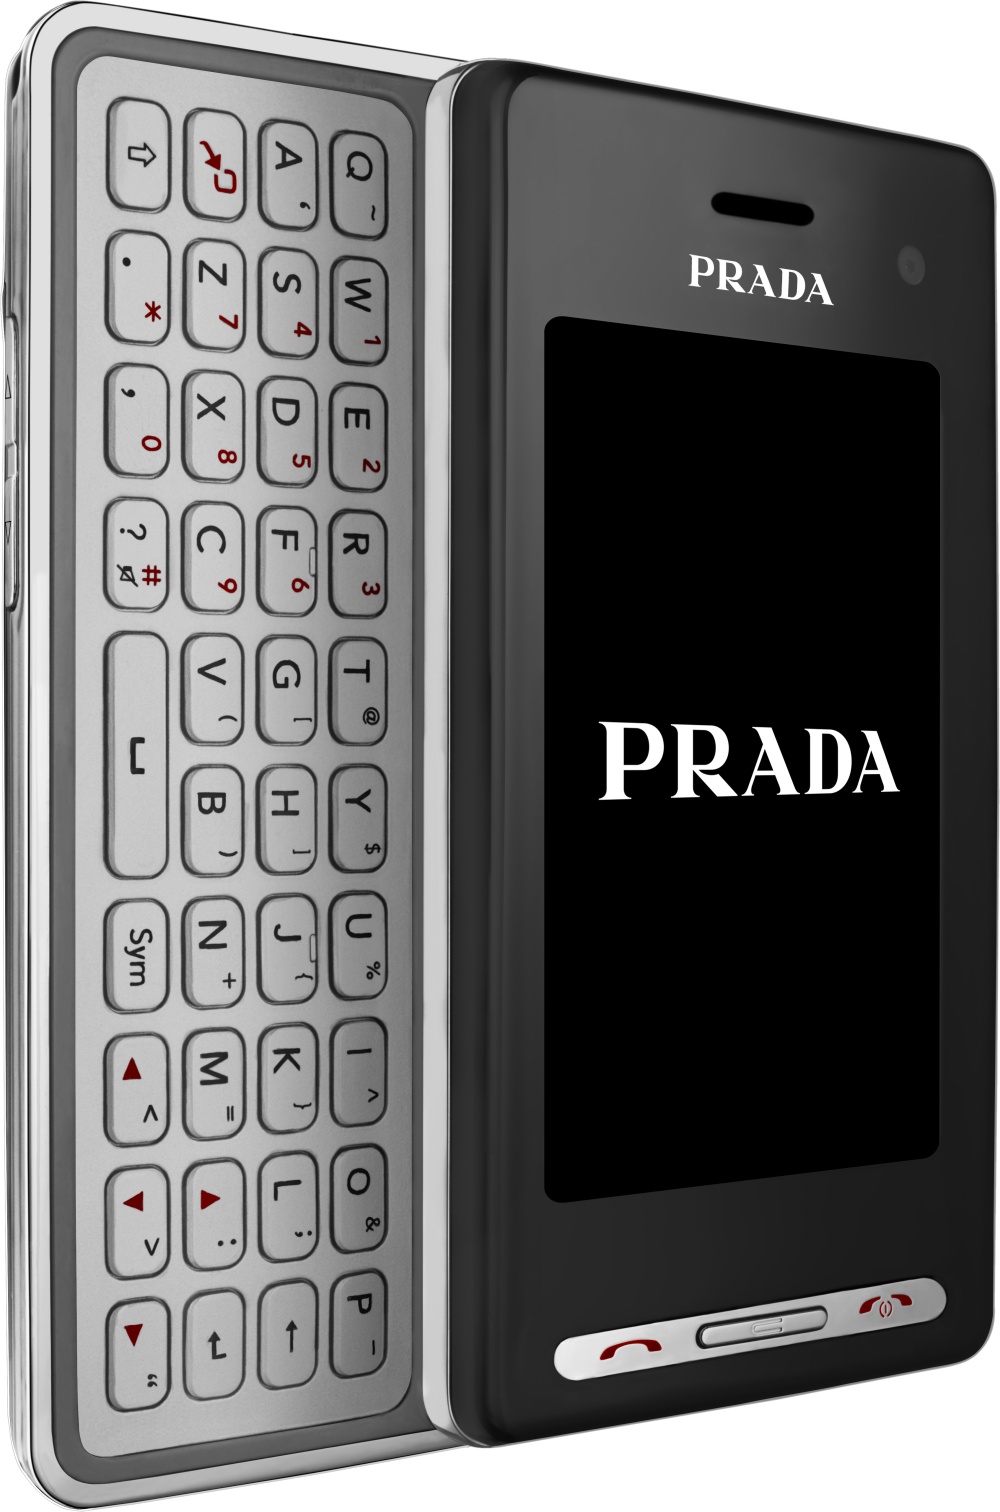 Retromobe - retro mobile phones and other gadgets: LG PRADA - the era of  the iPhone killer (2007)